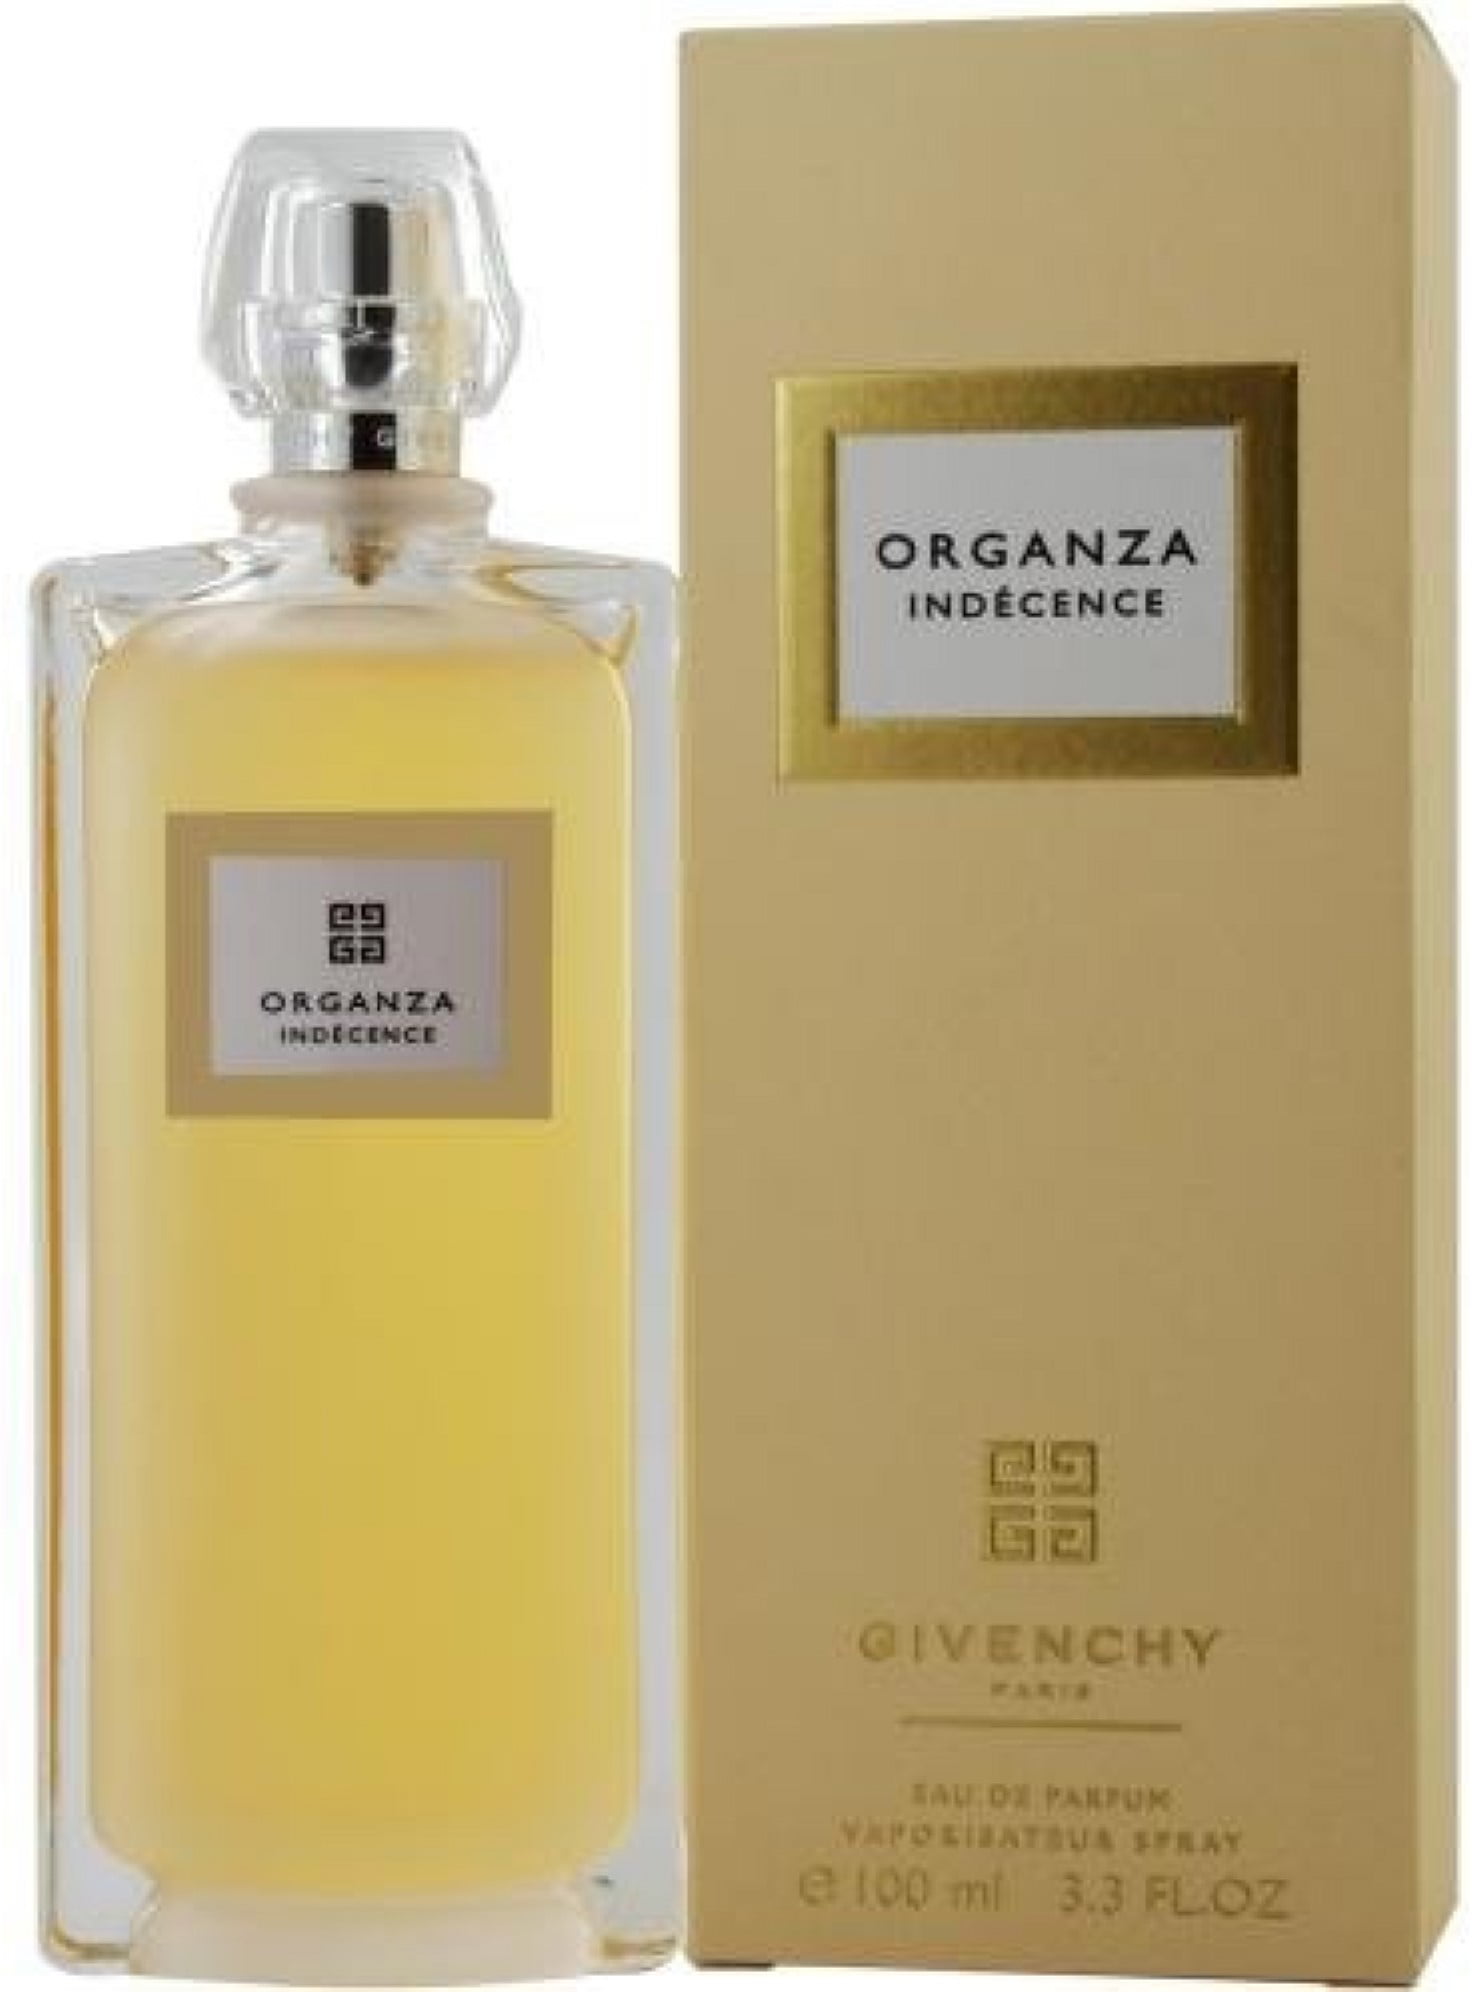 Givenchy - Givenchy Organza Indecence Eau De Parfum Spray For Women 3.3